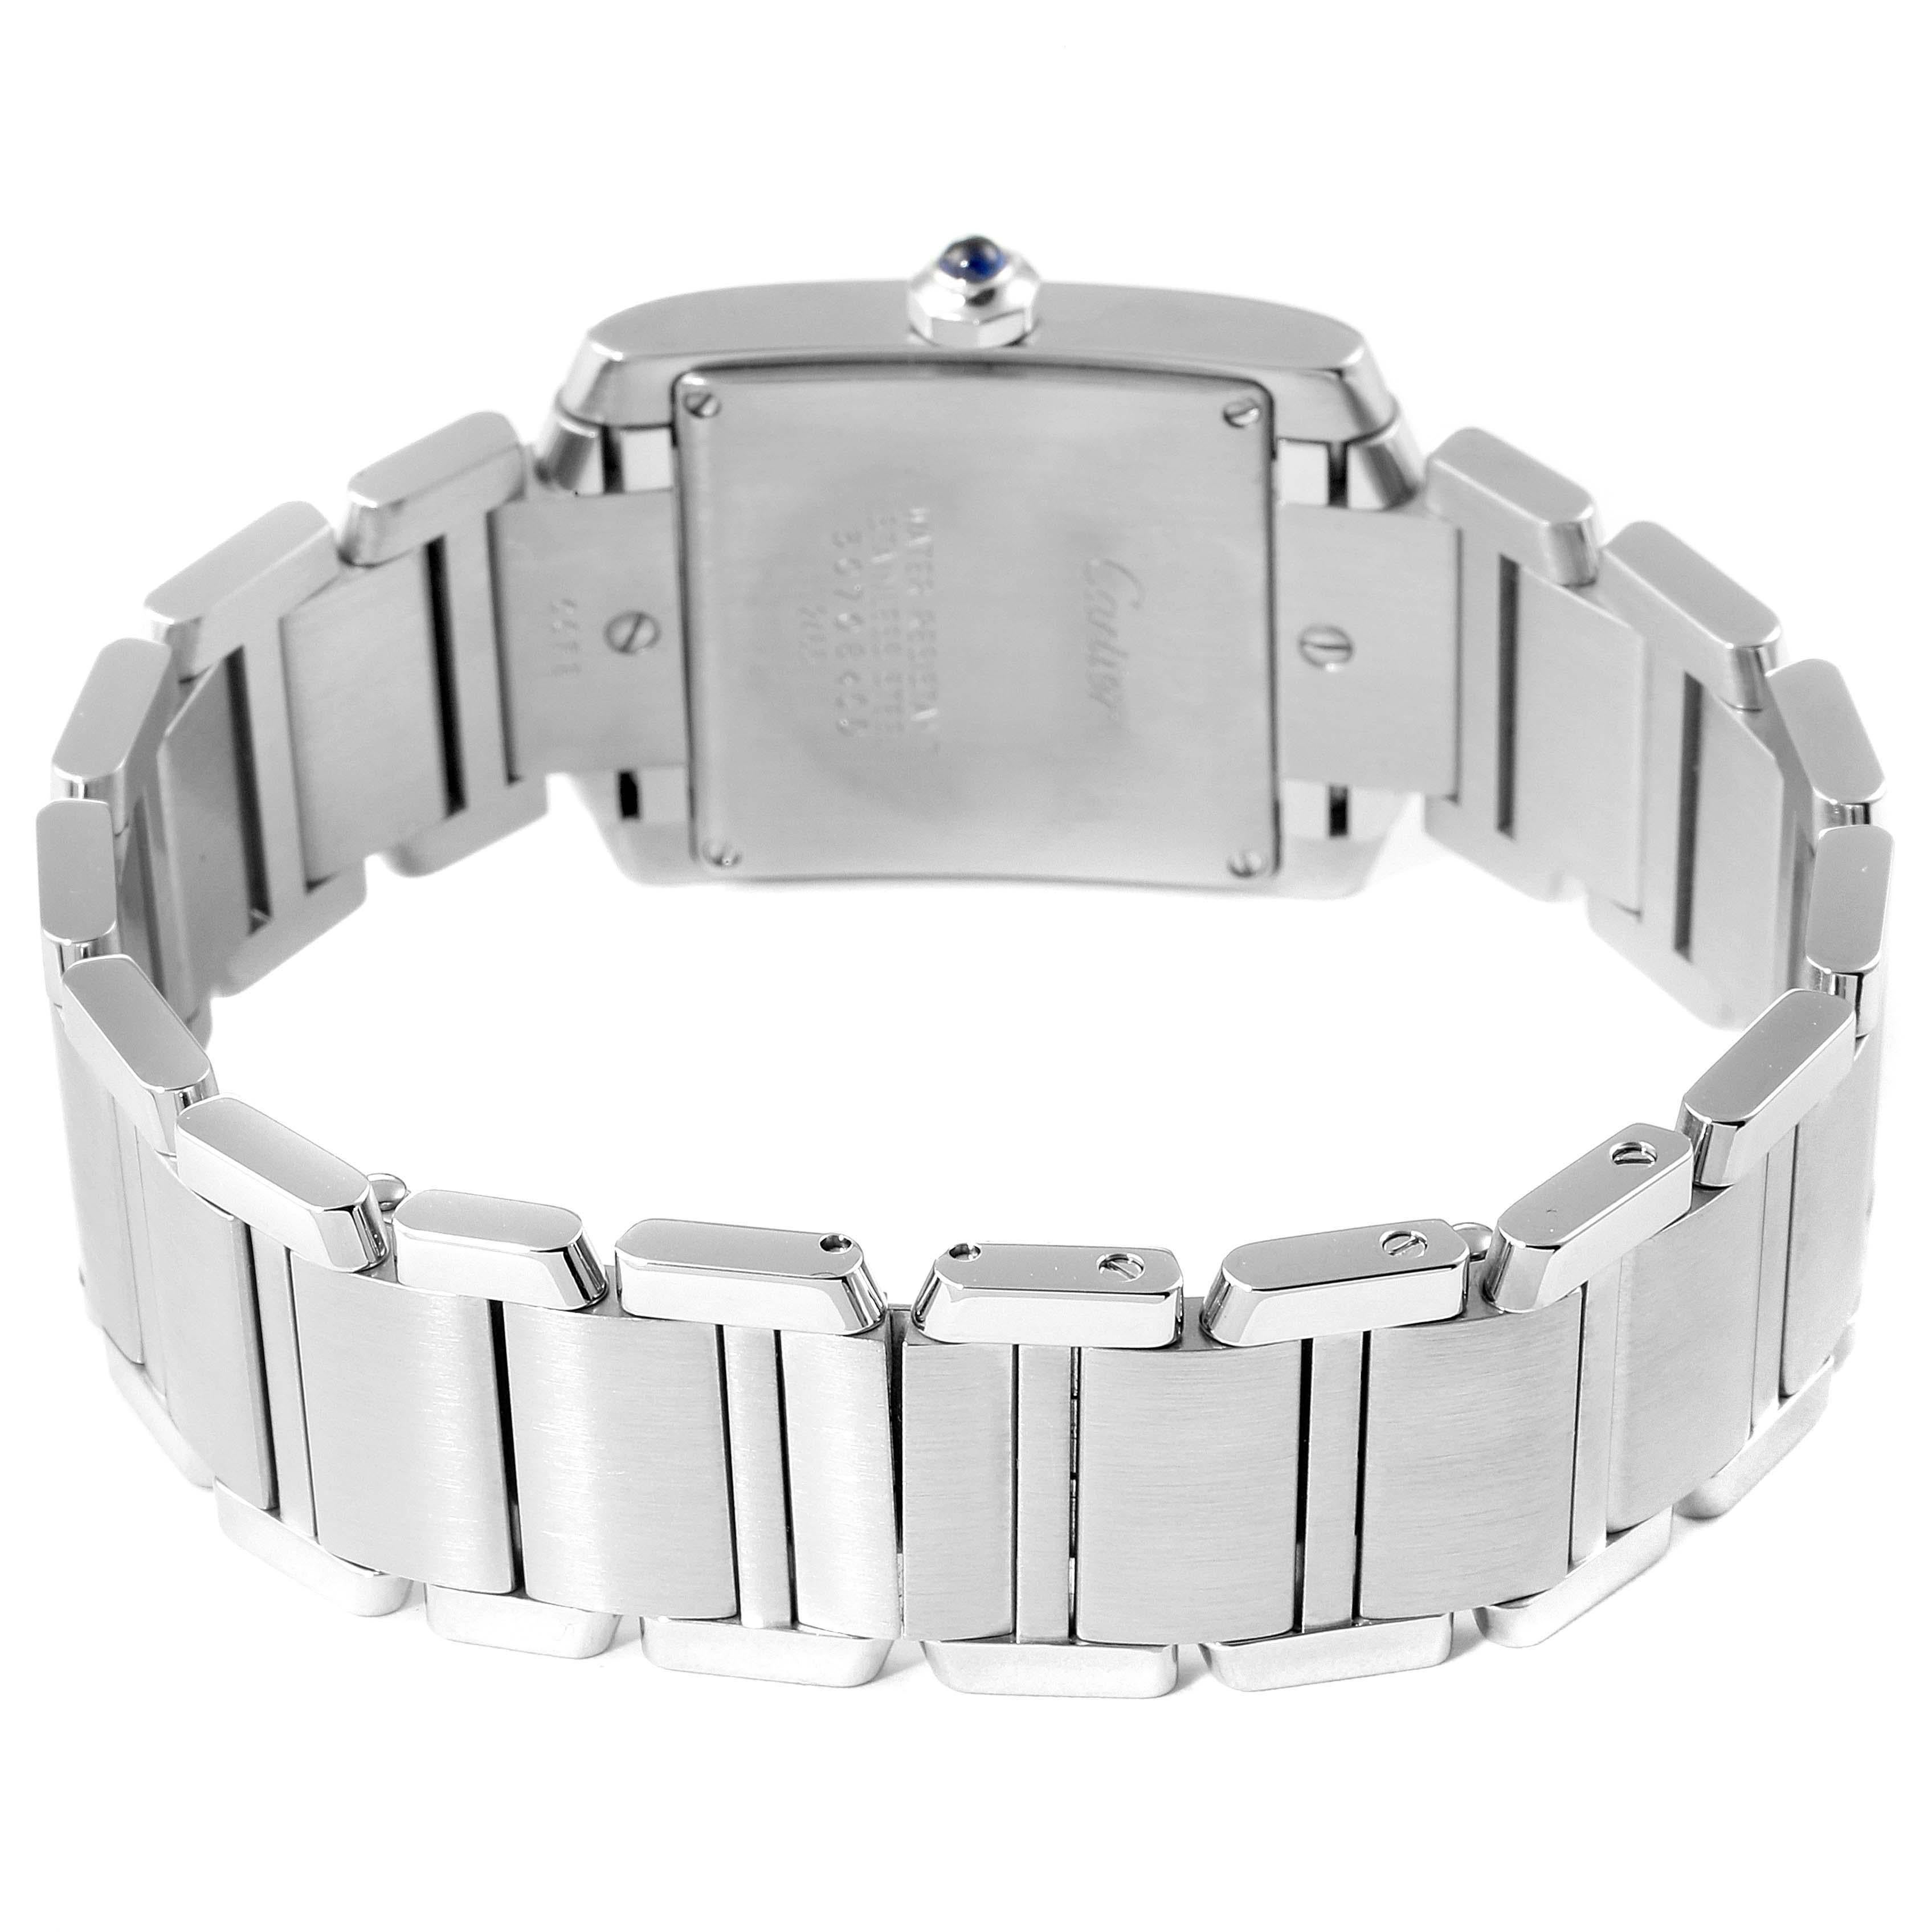 Cartier Tank Francaise Midsize Silver Dial Ladies Watch W51011Q3 For Sale 4